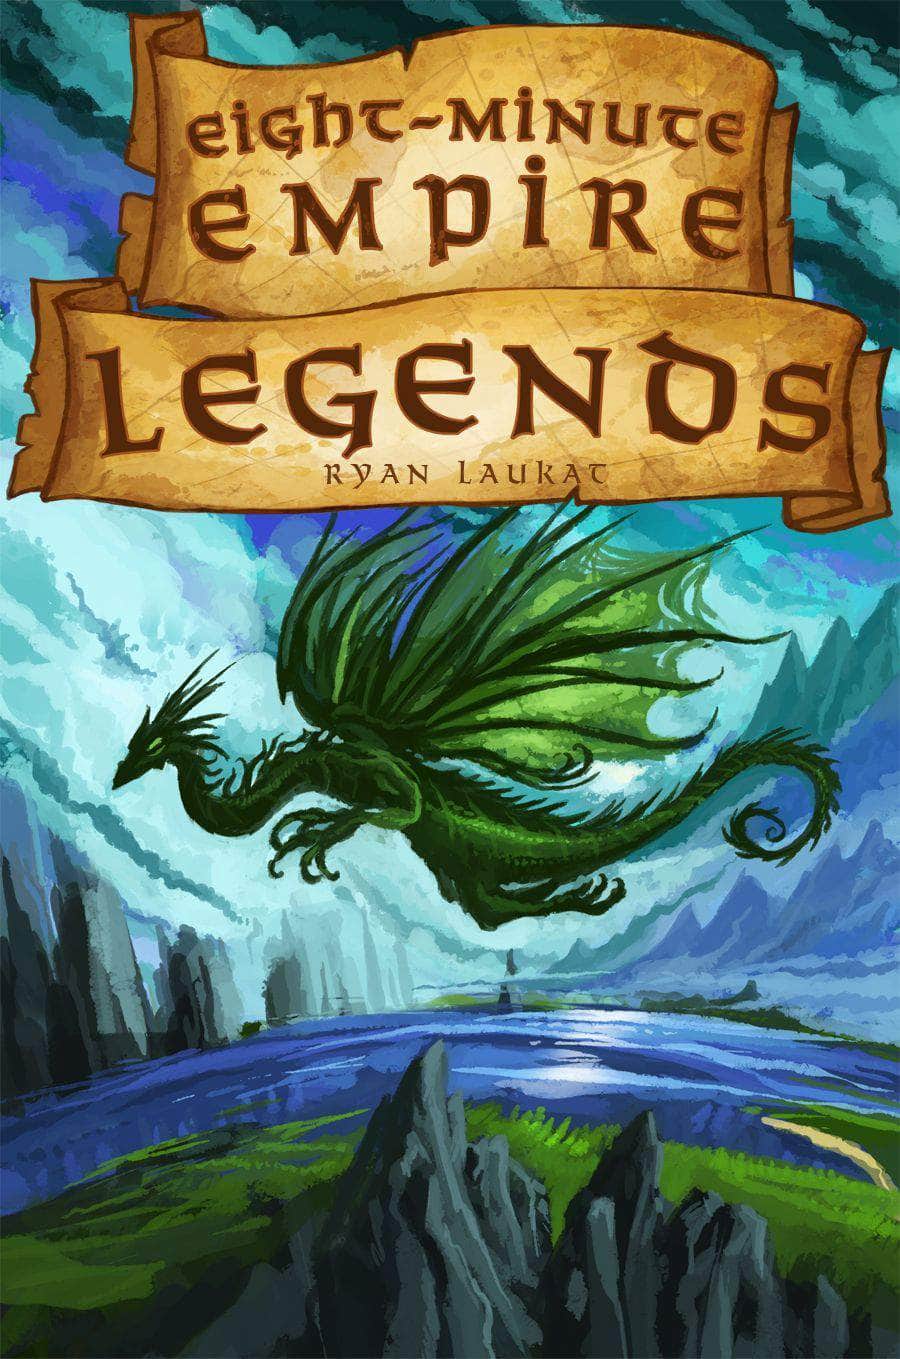 Otte minutters imperium: Legends (Kickstarter Special) Kickstarter Board Game Red Raven Games KS800067A